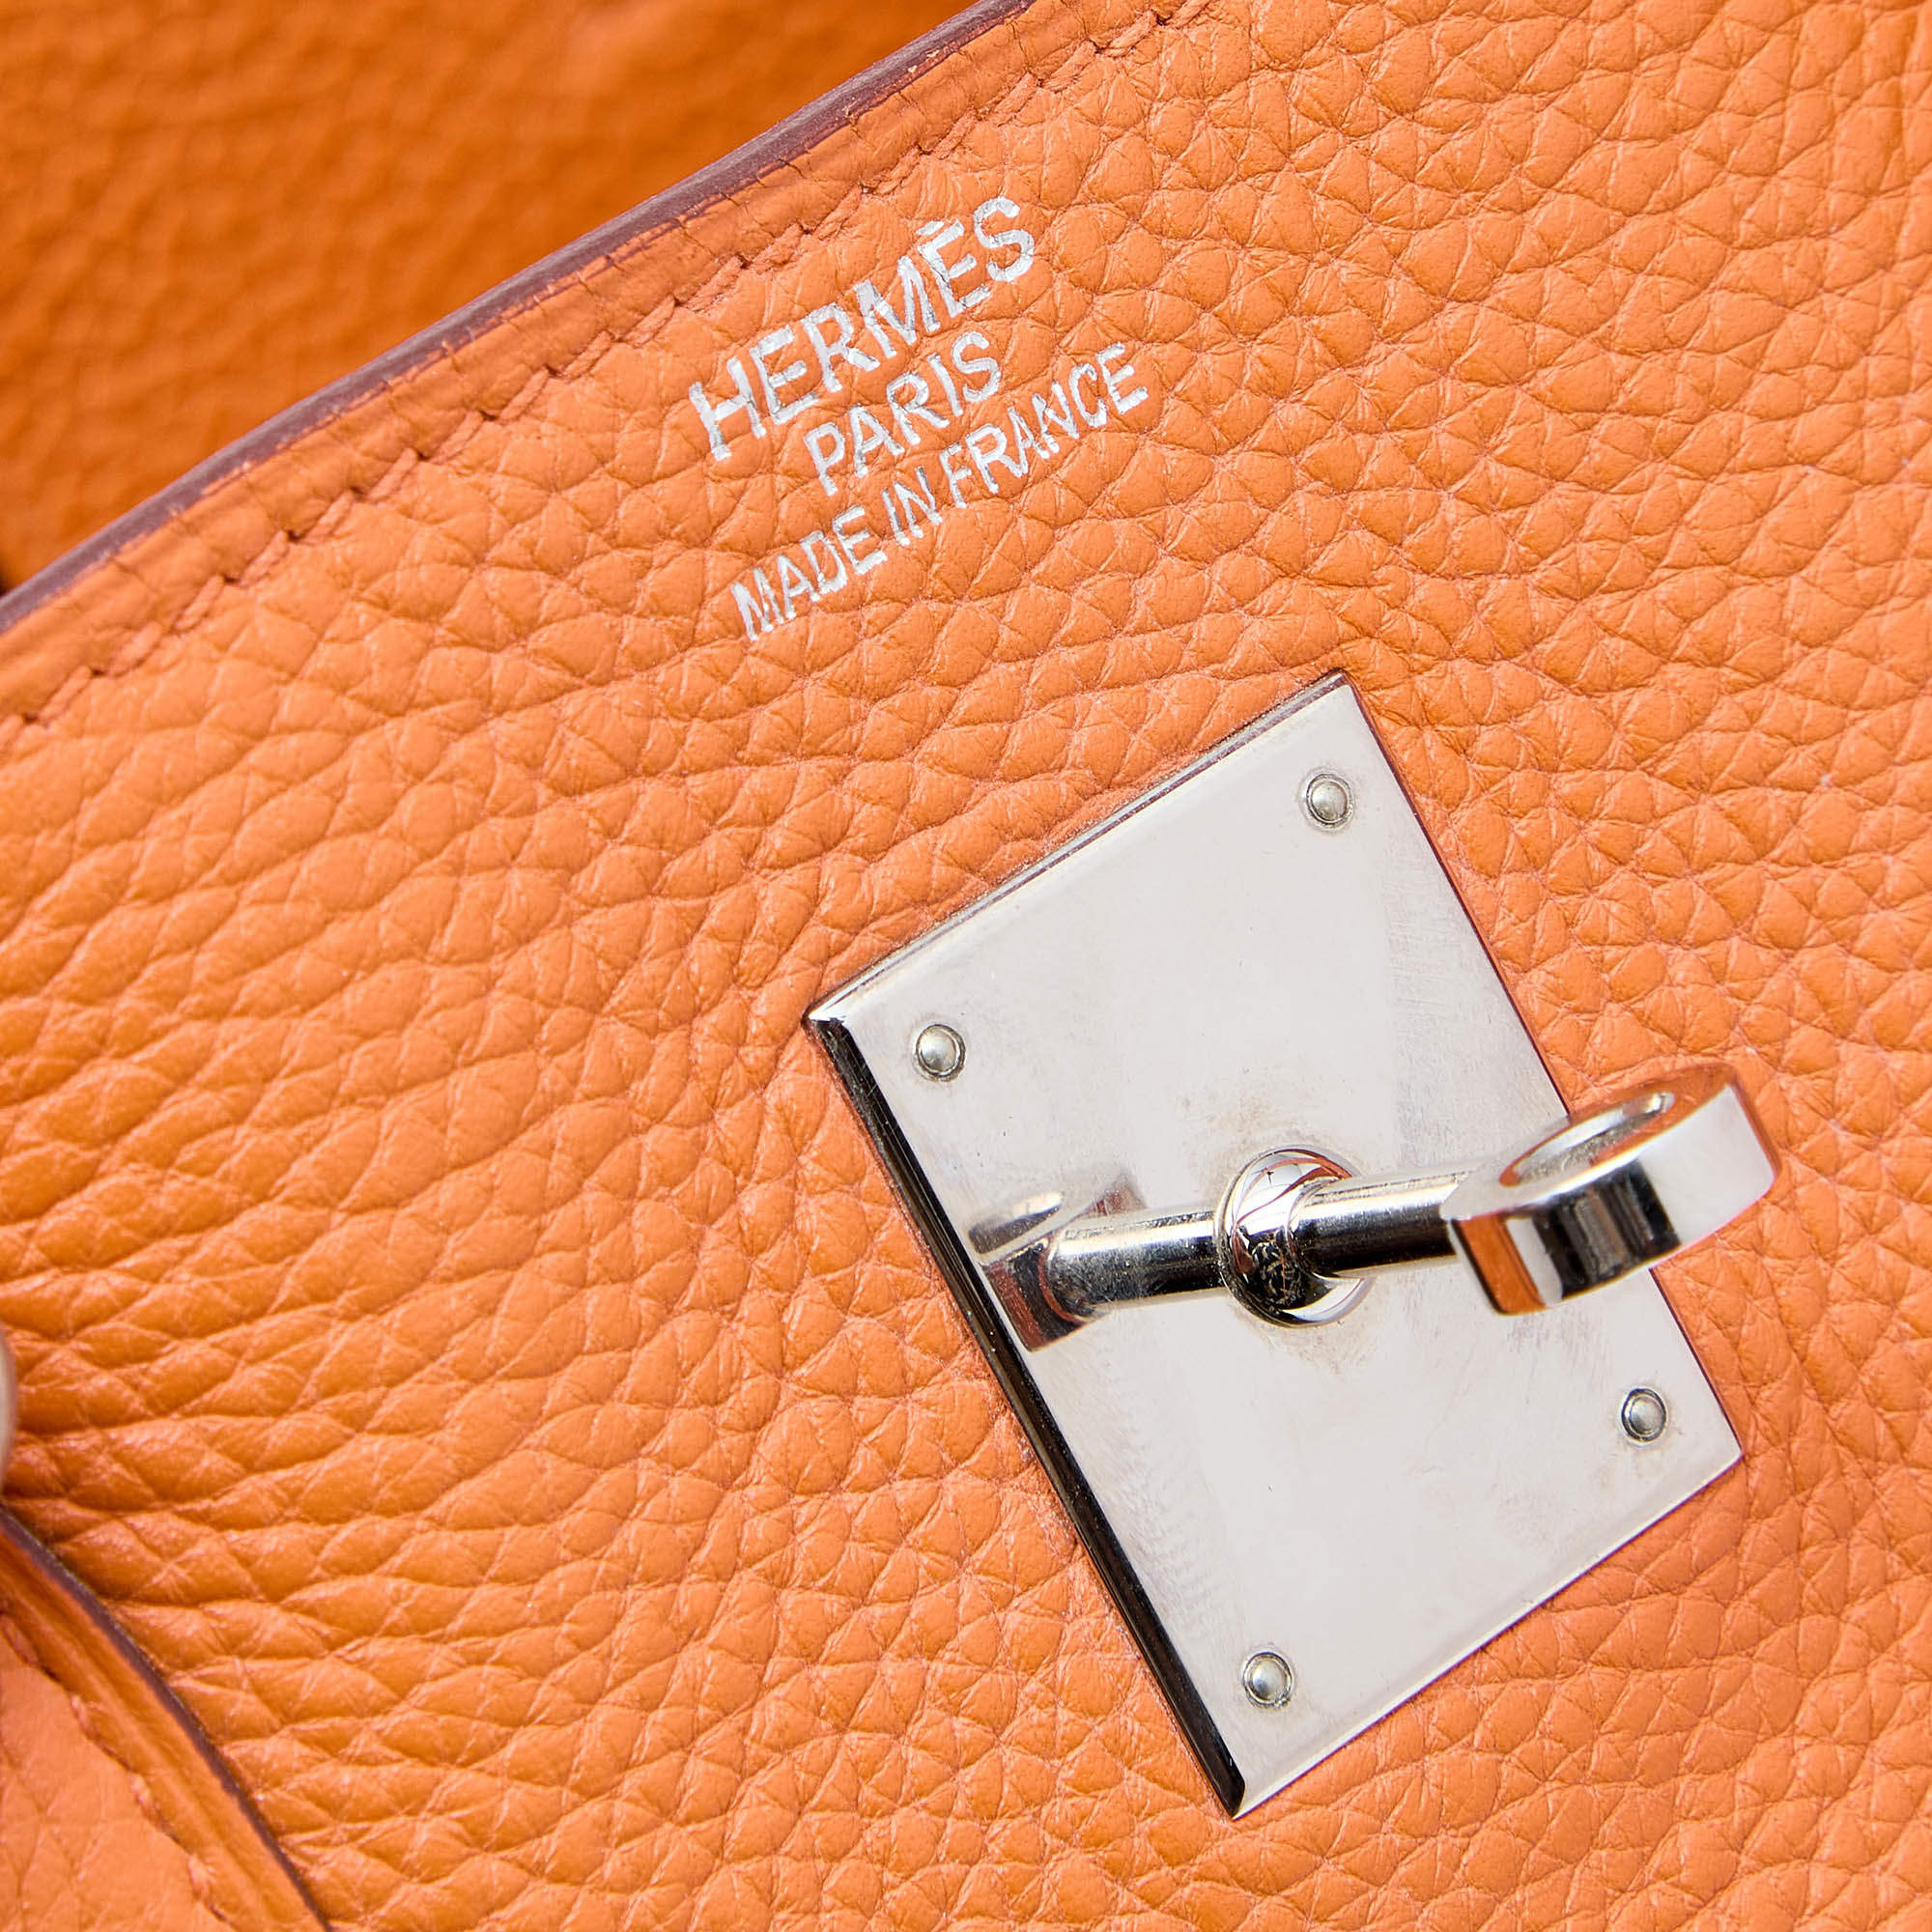 Hermès Orange Togo Leather Palladium Plated Birkin 40 Bag Hermes